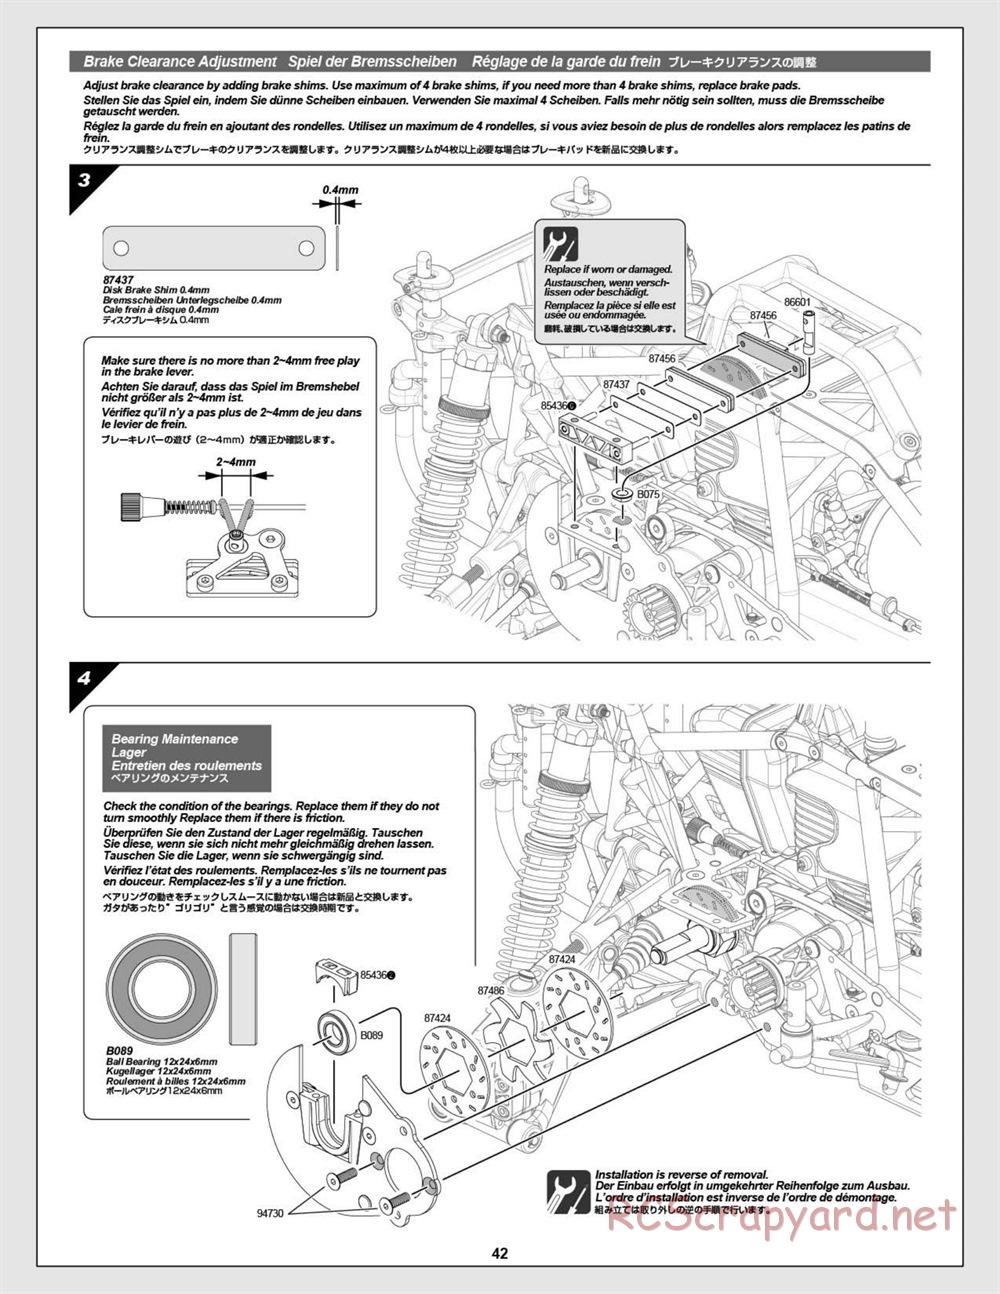 HPI - Baja 5T - Manual - Page 42